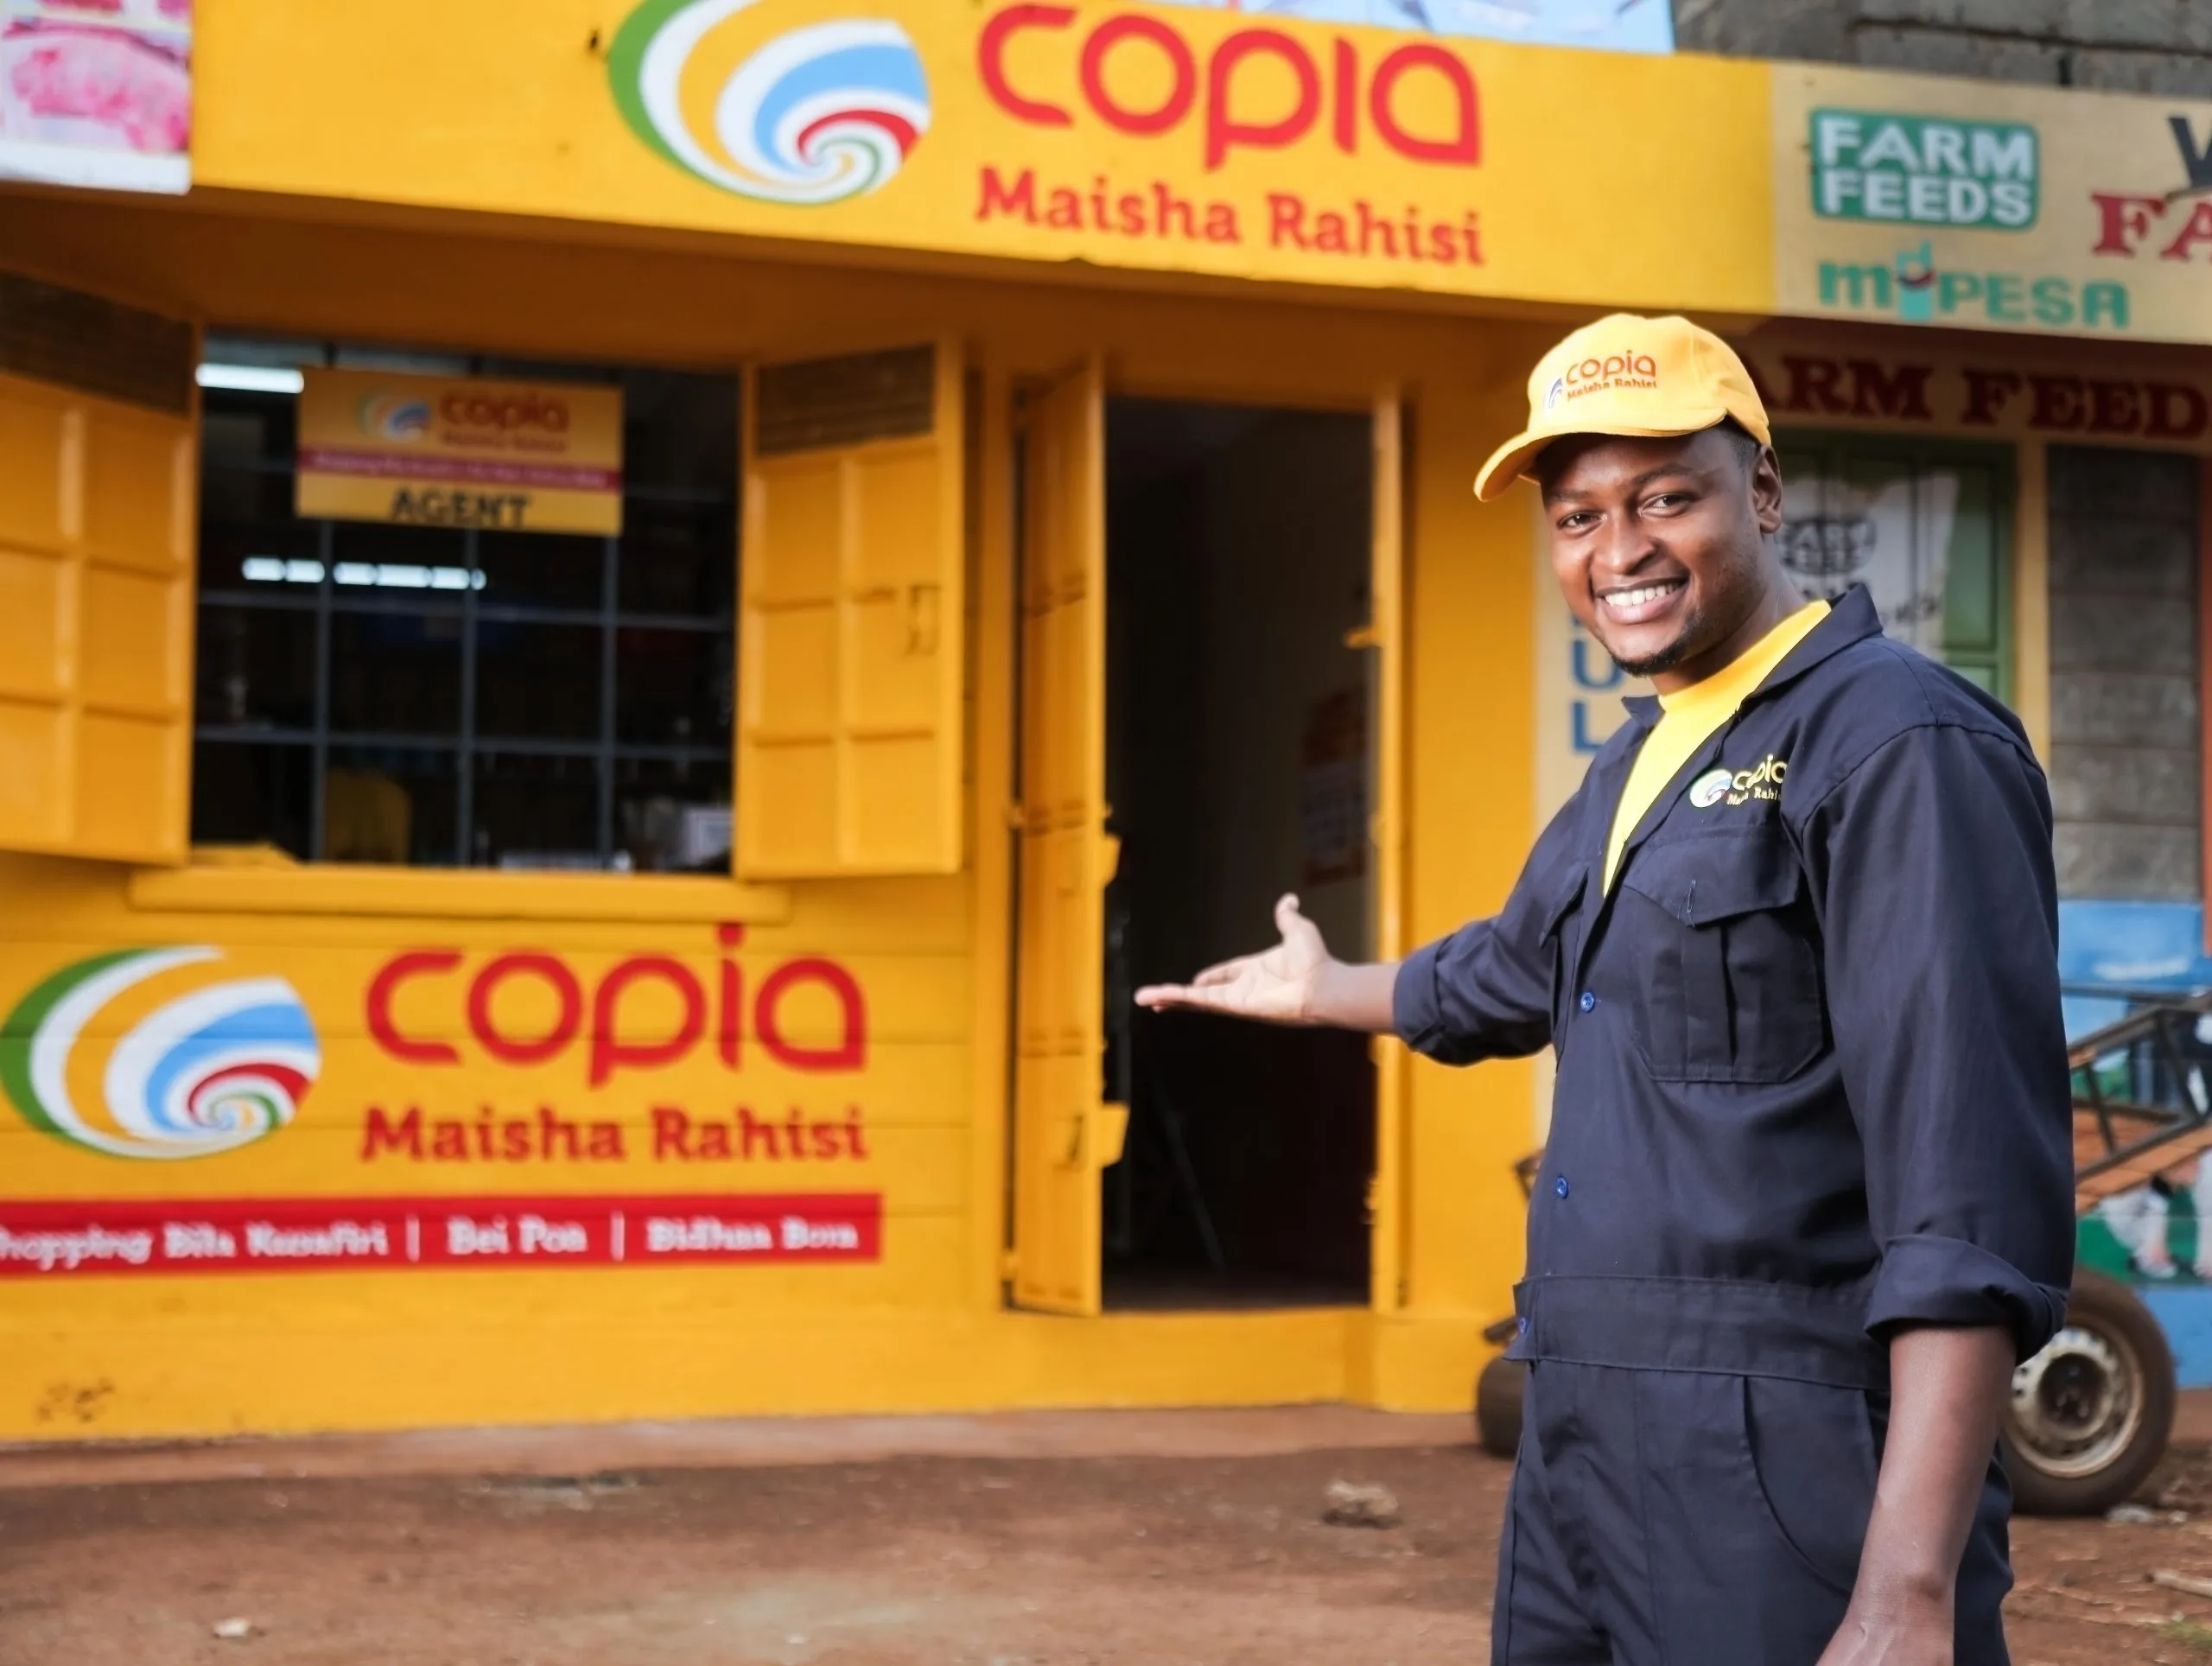 Copia Global liquidates, lays off all staff